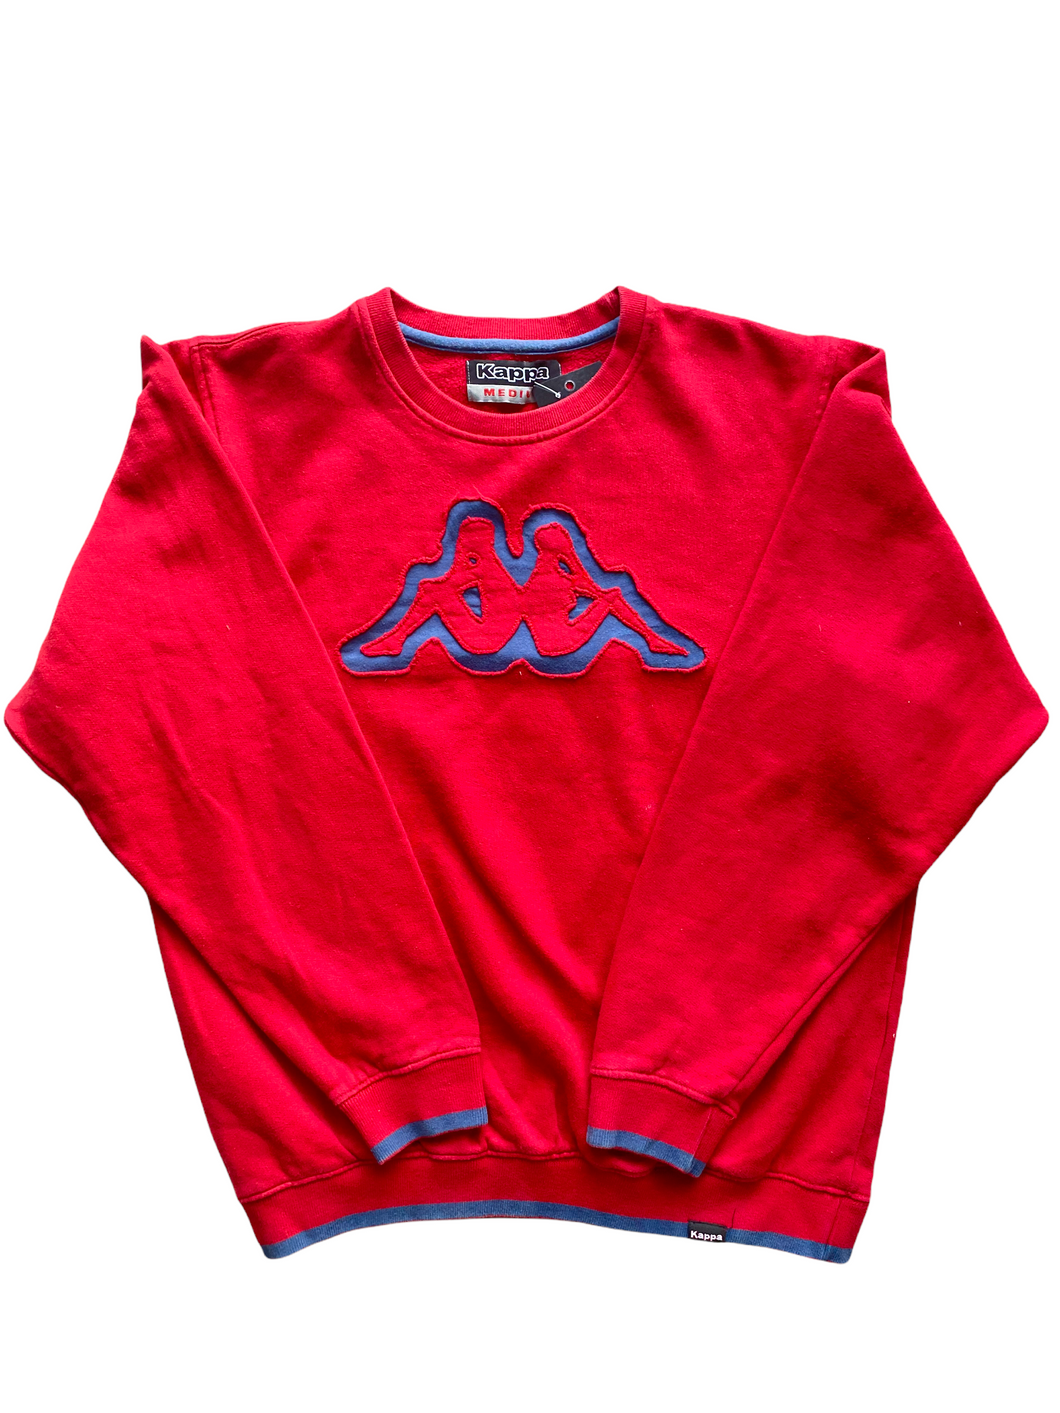 Vintage Red Kappa Sweater (L)